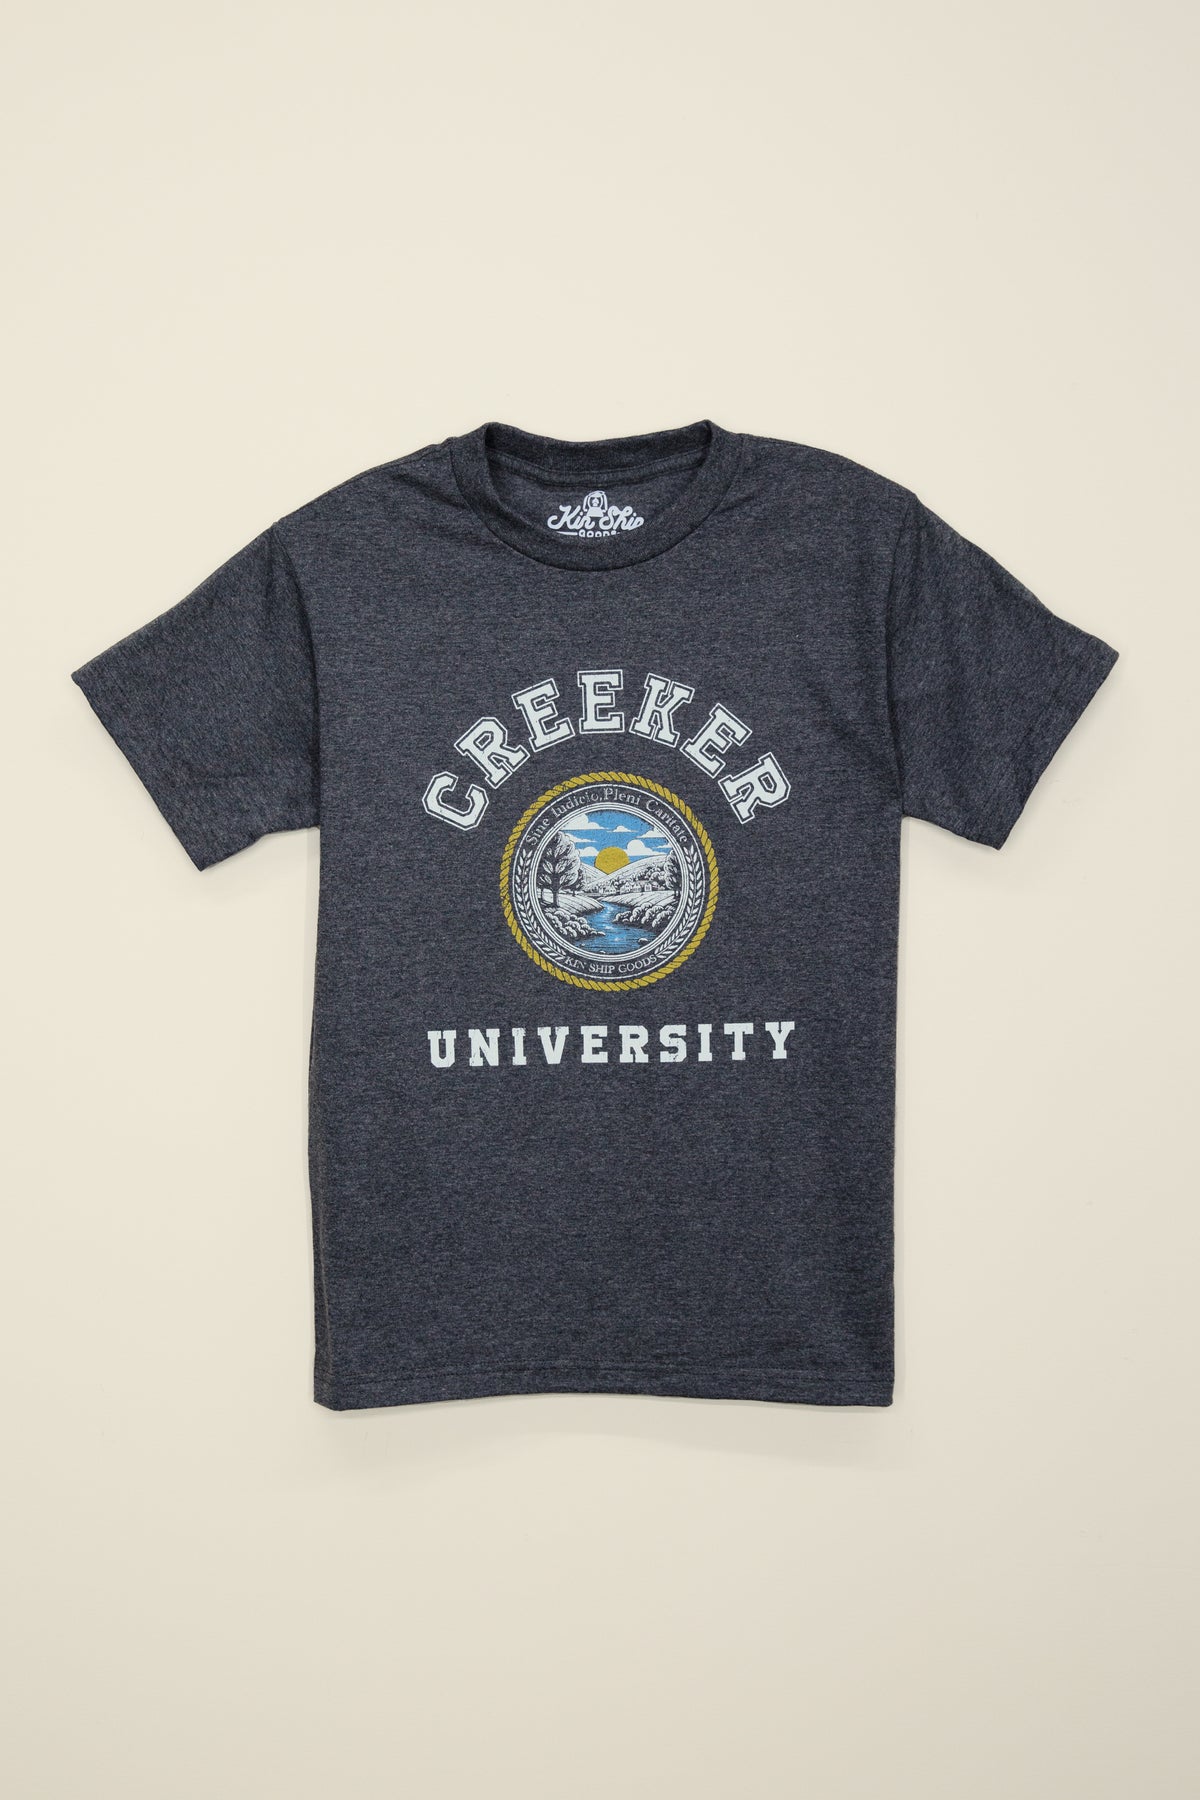 creeker university tee